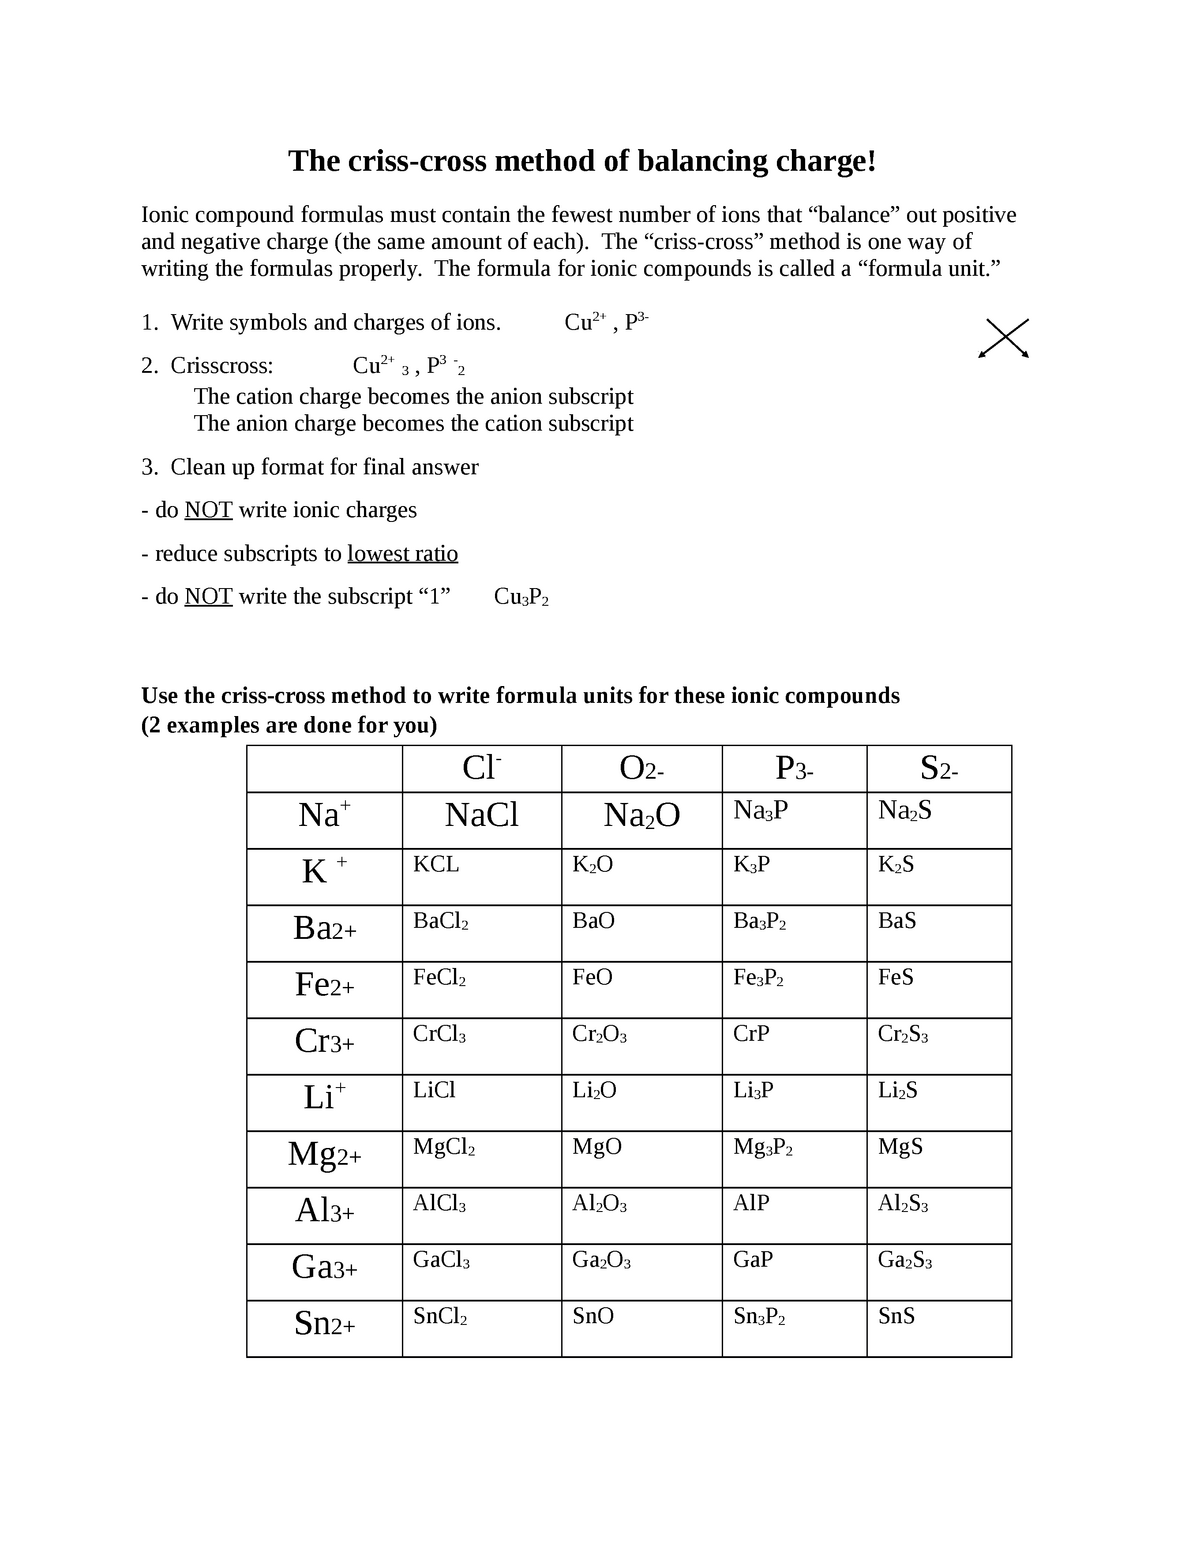 writing-chemical-formulas-criss-cross-method-worksheet-answers